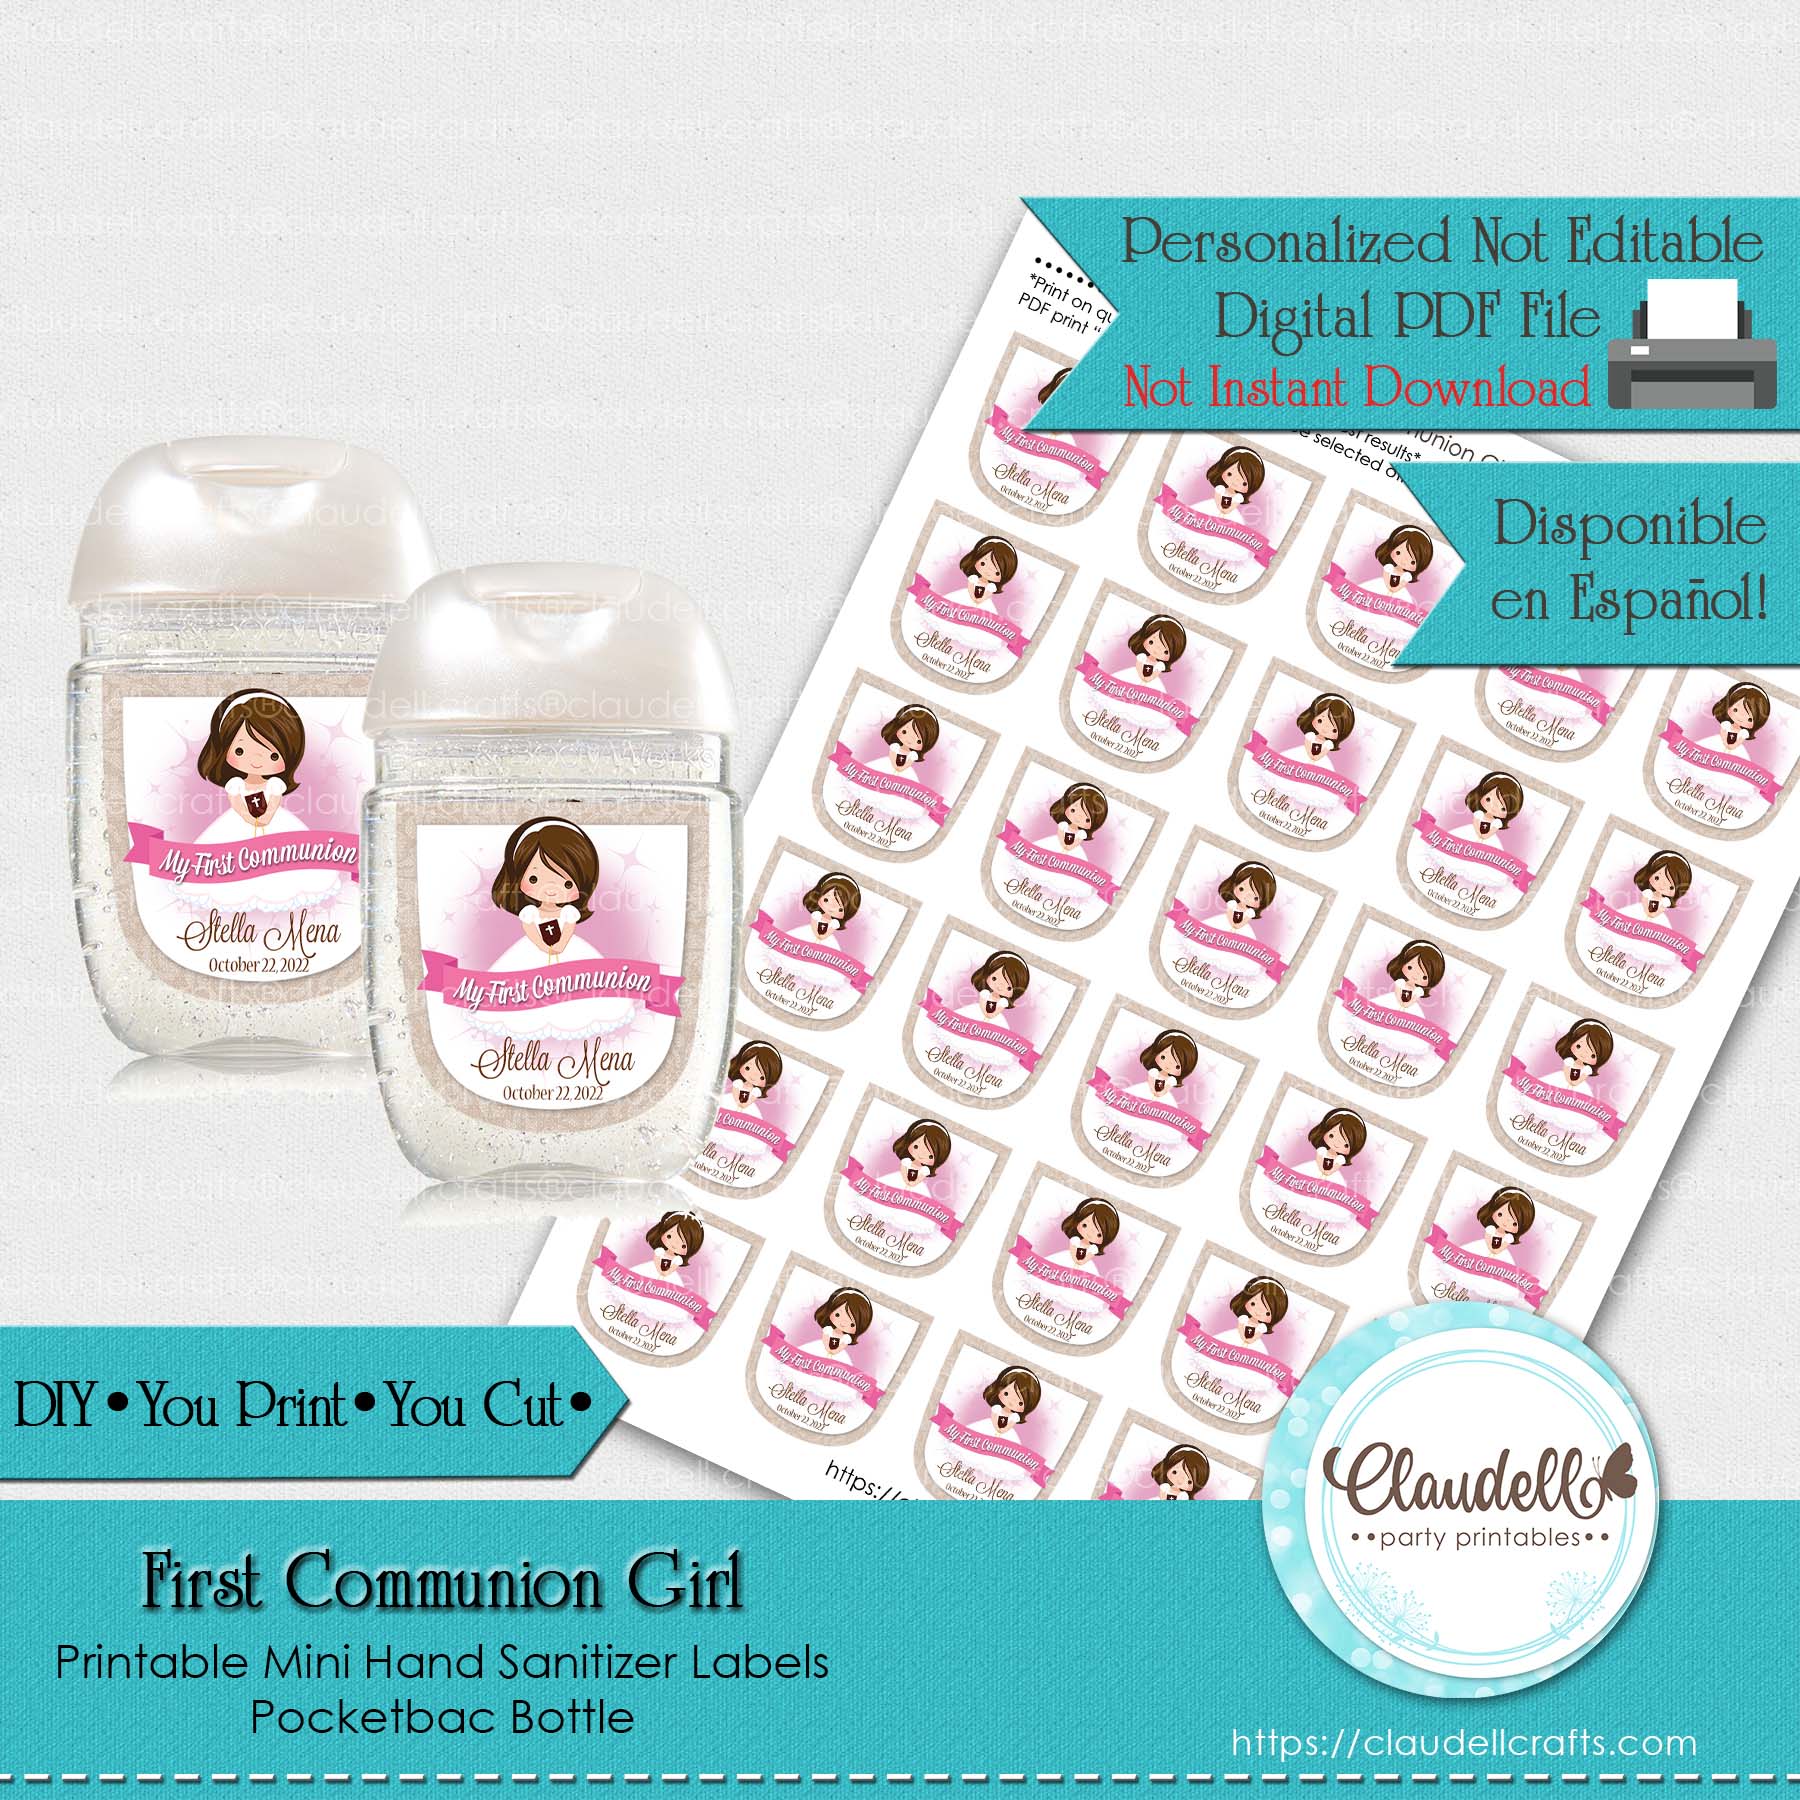 First Communion Girl Printable Mini Hand Sanitizer Label, Pocketbac Semi Round Bottle Tag, Etiqueta Comunión Niña, Communion Personalized Labels, Event Favors/Digital File